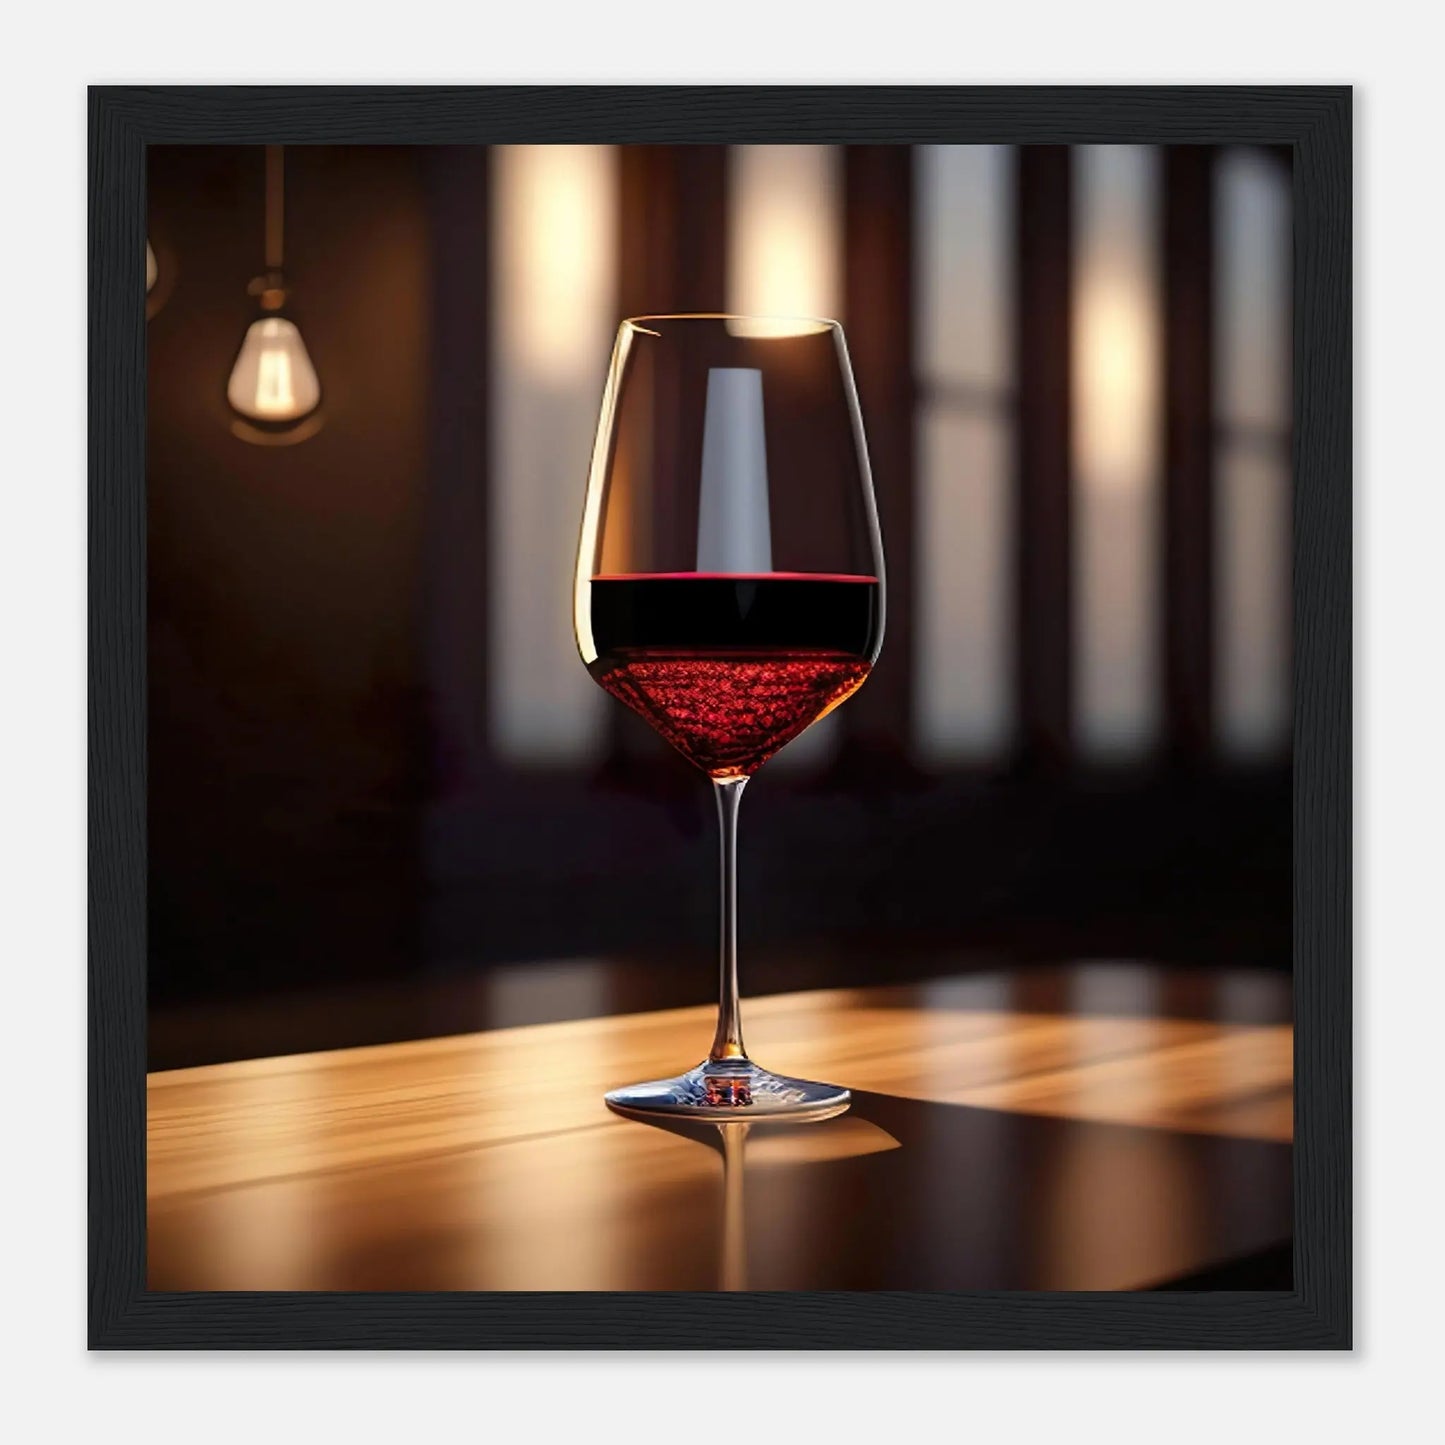 Gerahmtes Premium-Poster - Rotwein im Glas - Foto Stil, KI-Kunst - RolConArt, Kreative Vielfalt, 30x30-cm-12x12-Schwarzer-Rahmen